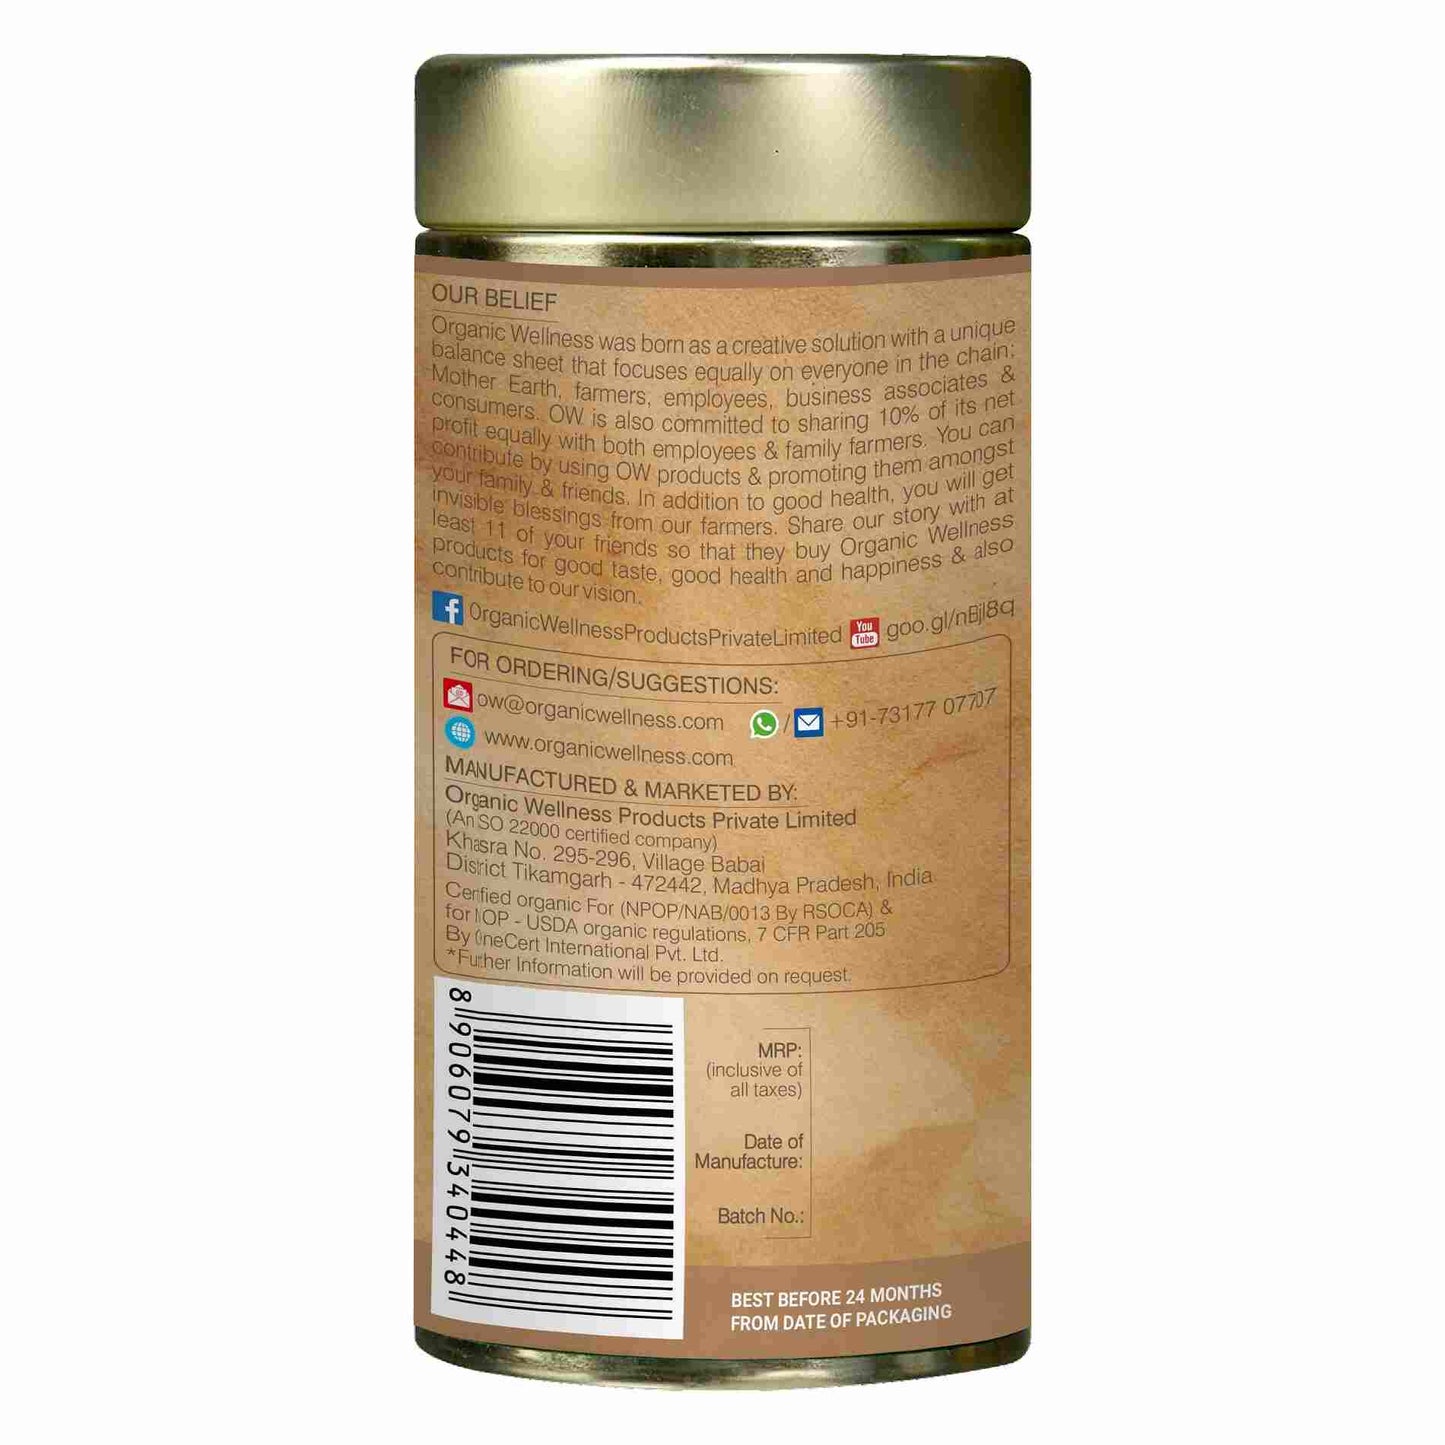 Organic Wellness Ginger Chai Tin Pack